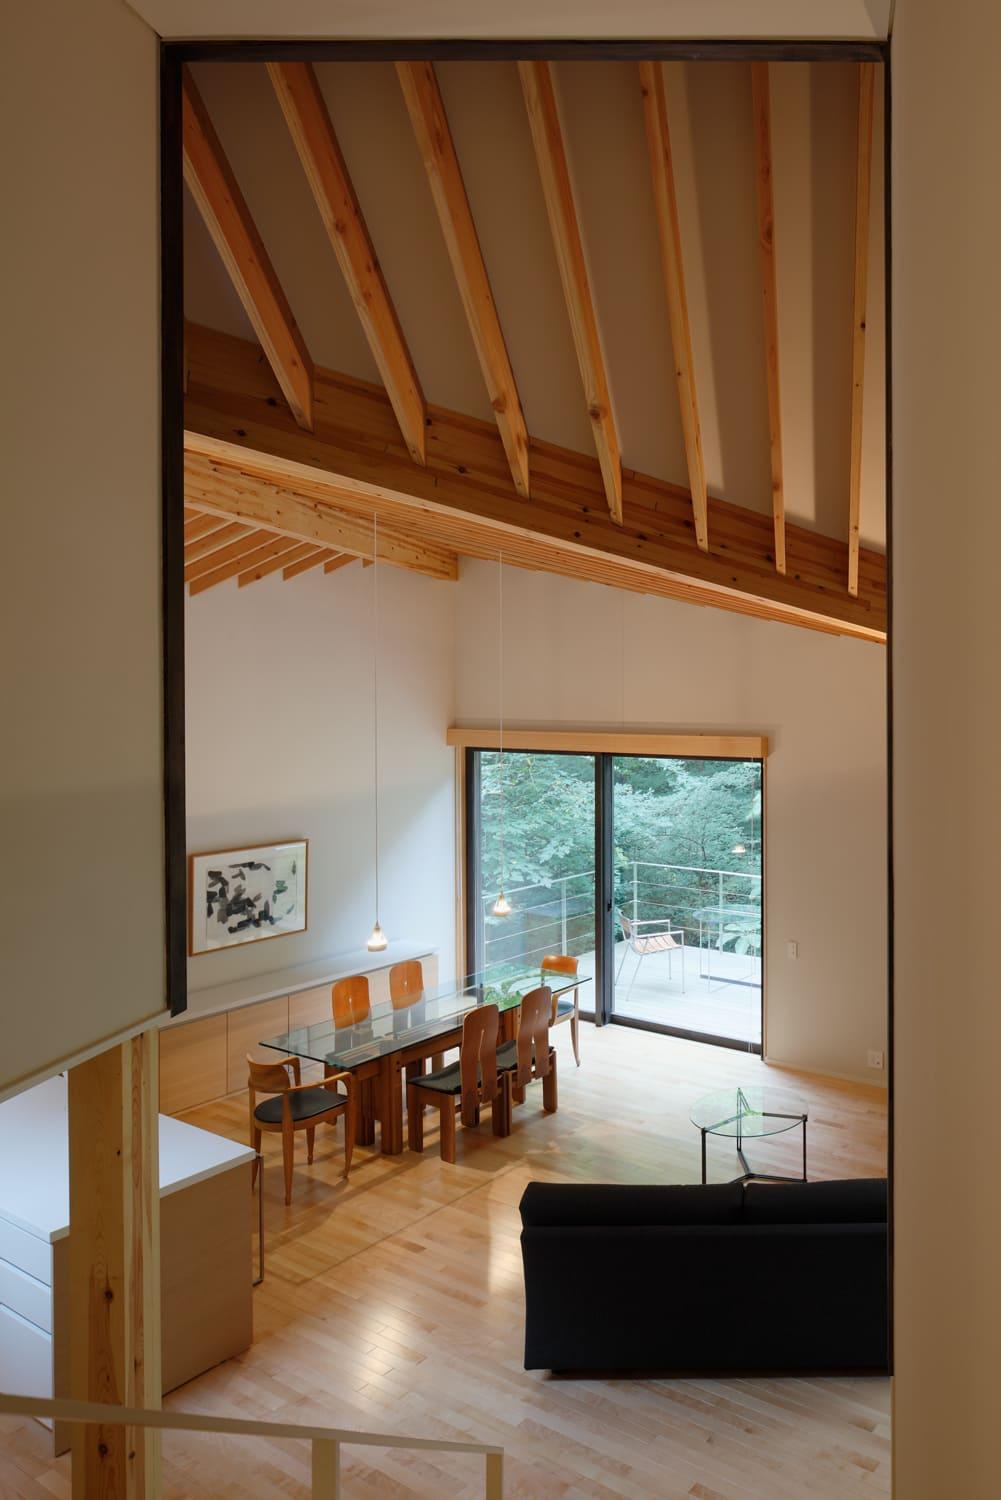 Image of "三笠の山荘｜Mikasa Cottage", the work by architect : Yasumi TAKETOMI (image number 12)